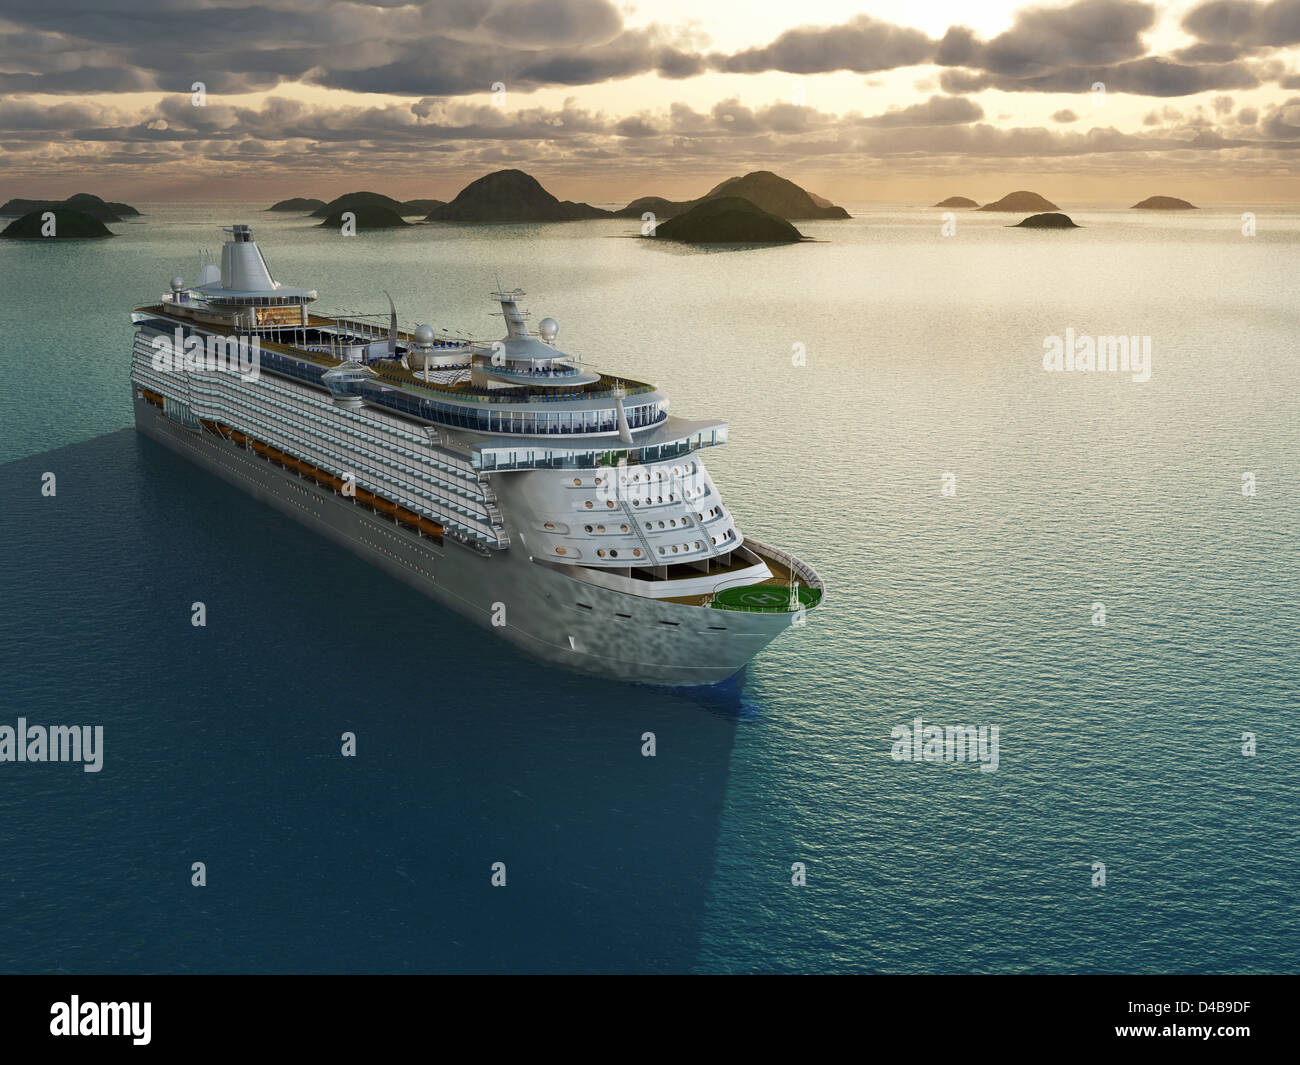 Cruise ship in the sea Stock Photo